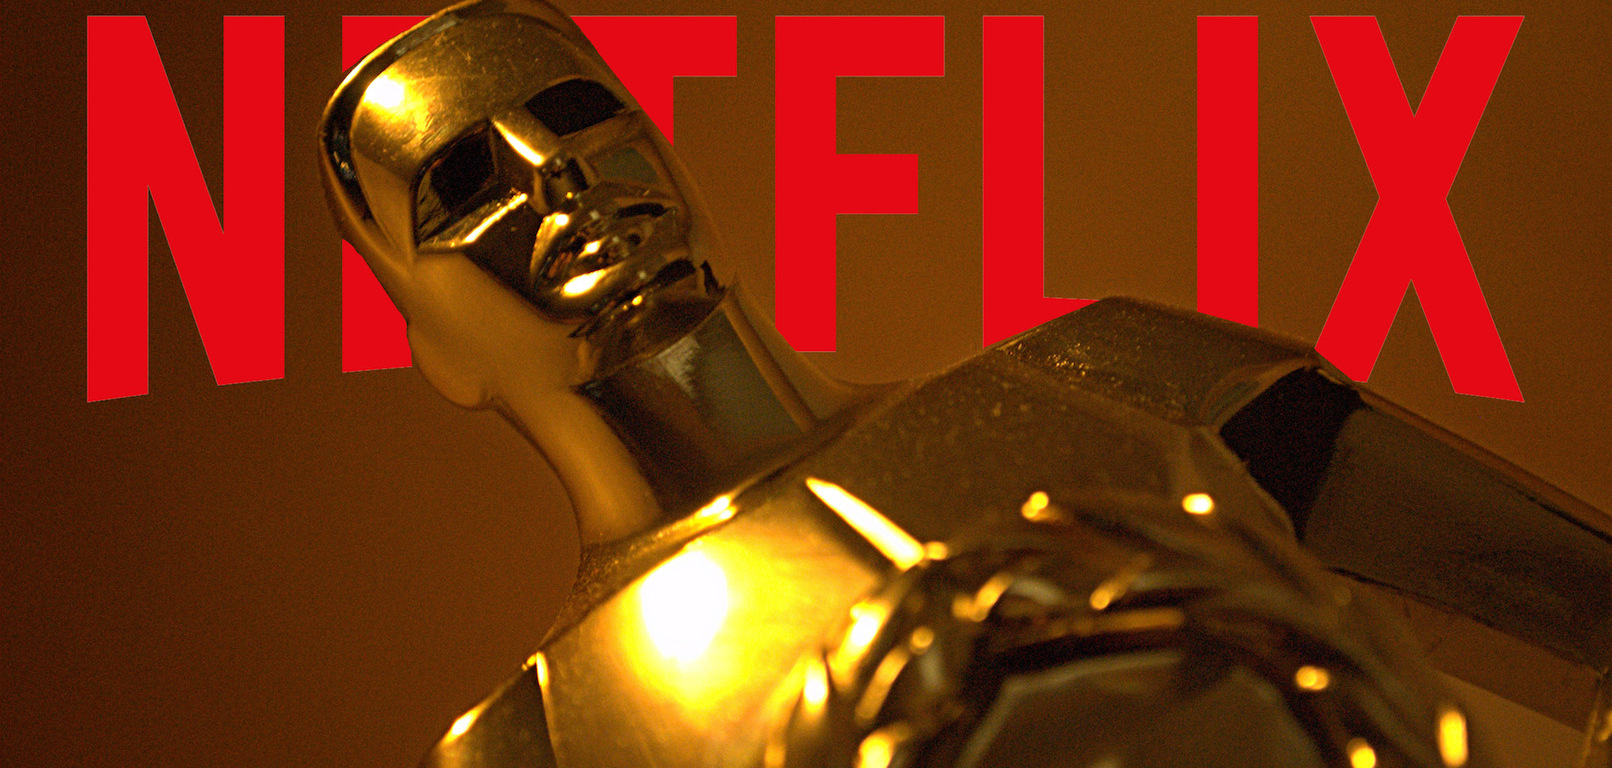 Oscar statue in front of Netflix logo